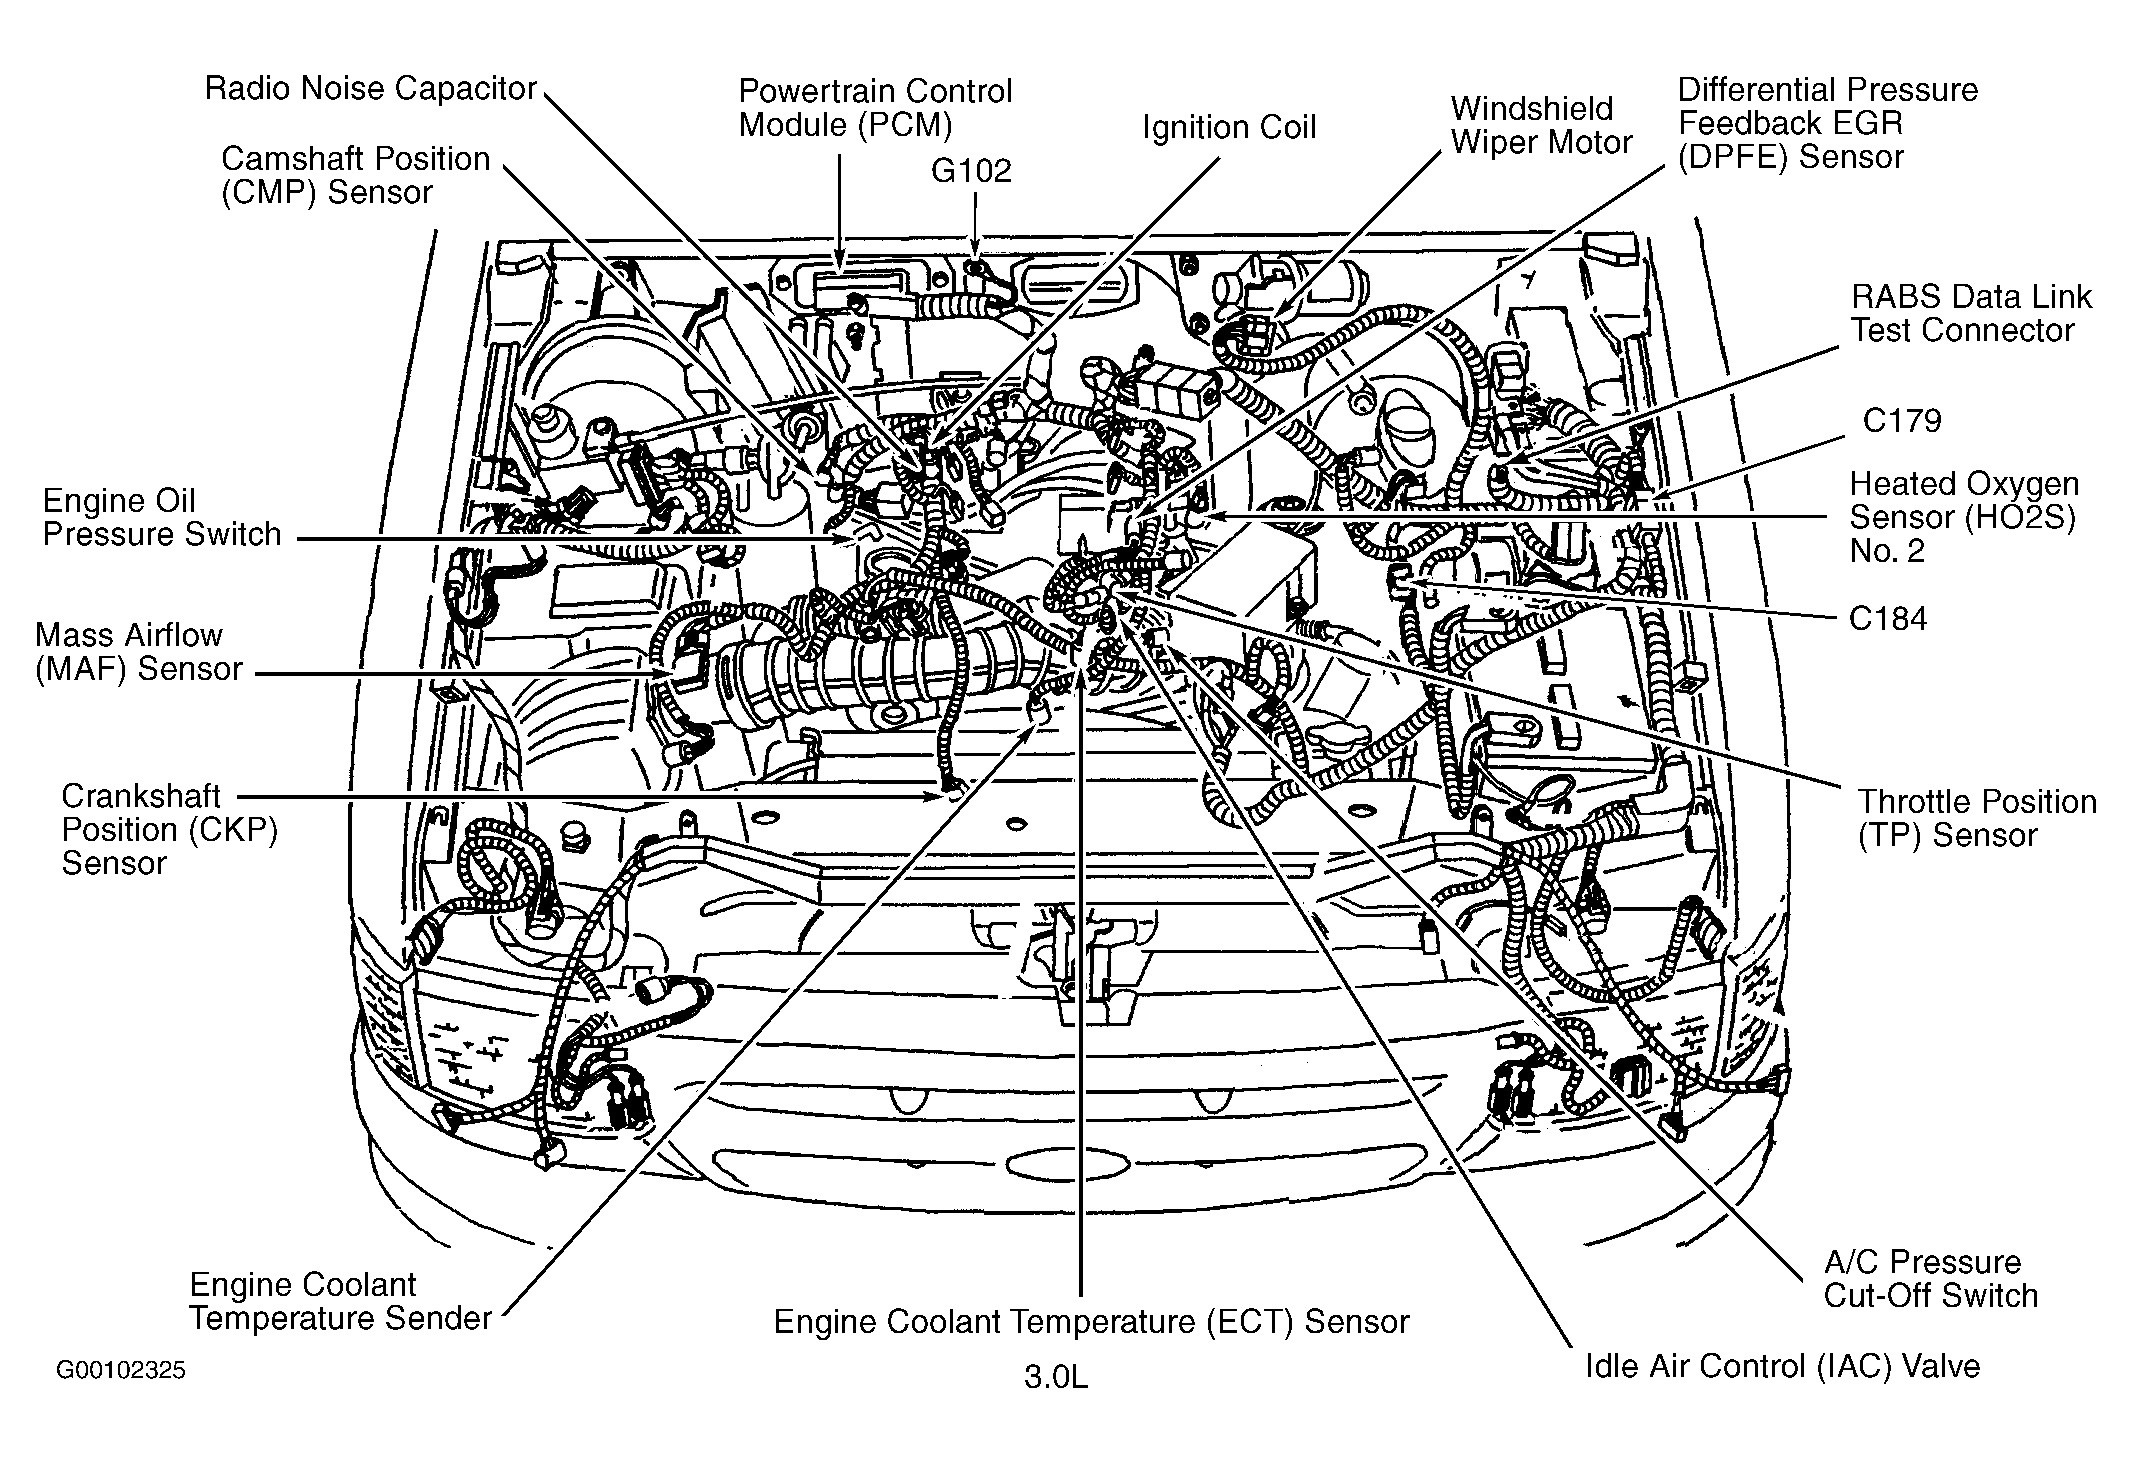 2007 Rav4 Engine Diagram Diagram] Rav4 V6 Engine Diagram Full Version Hd Quality Of 2007 Rav4 Engine Diagram